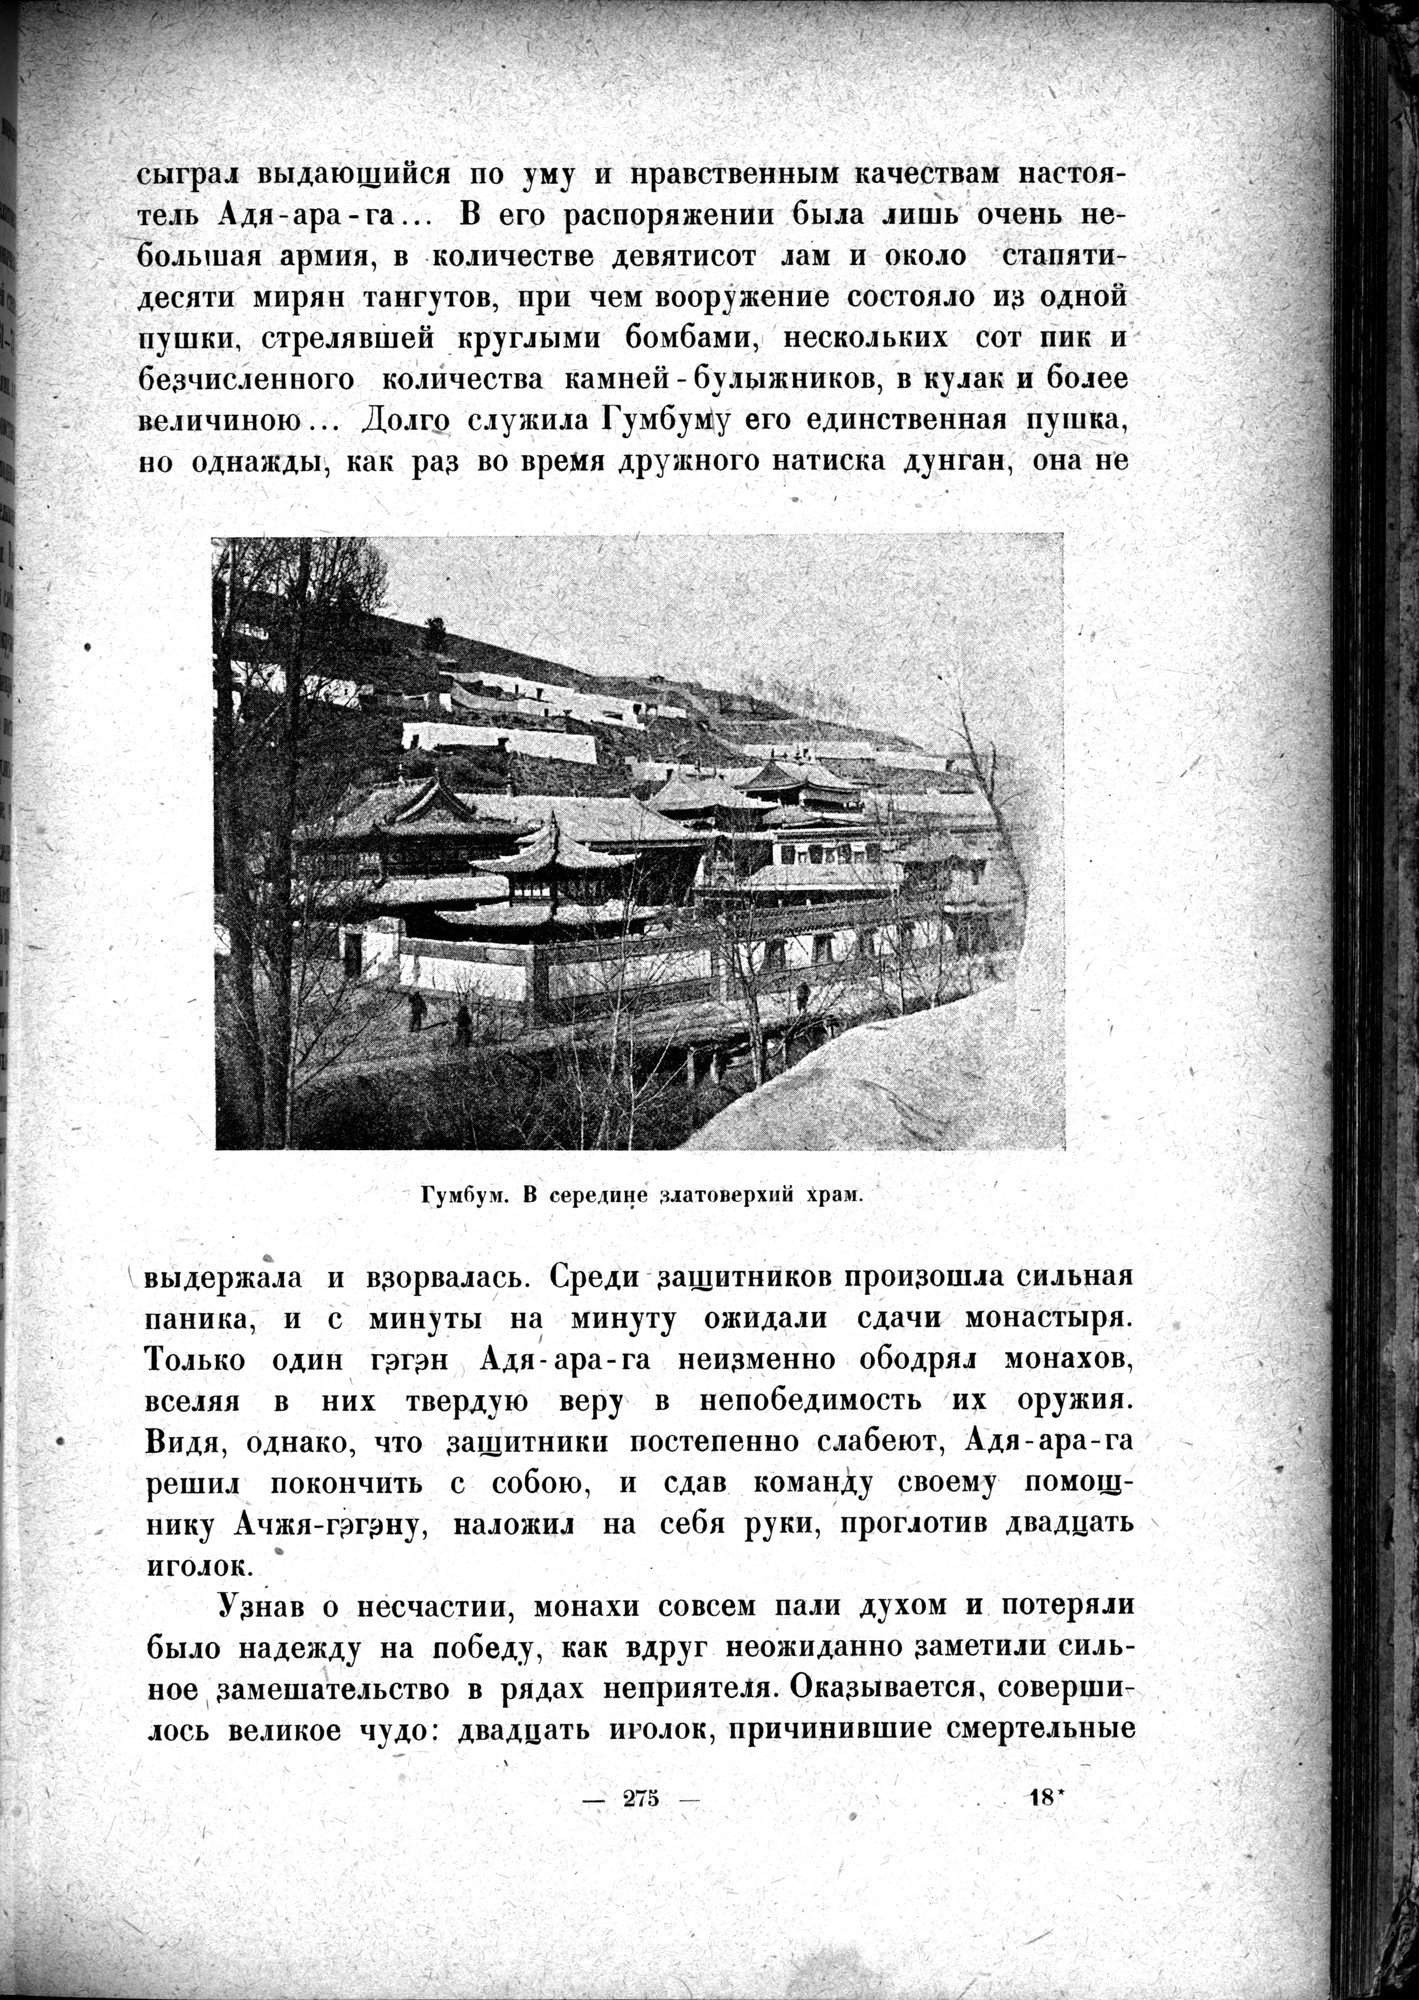 Mongoliya i Amdo i mertby gorod Khara-Khoto : vol.1 / Page 325 (Grayscale High Resolution Image)